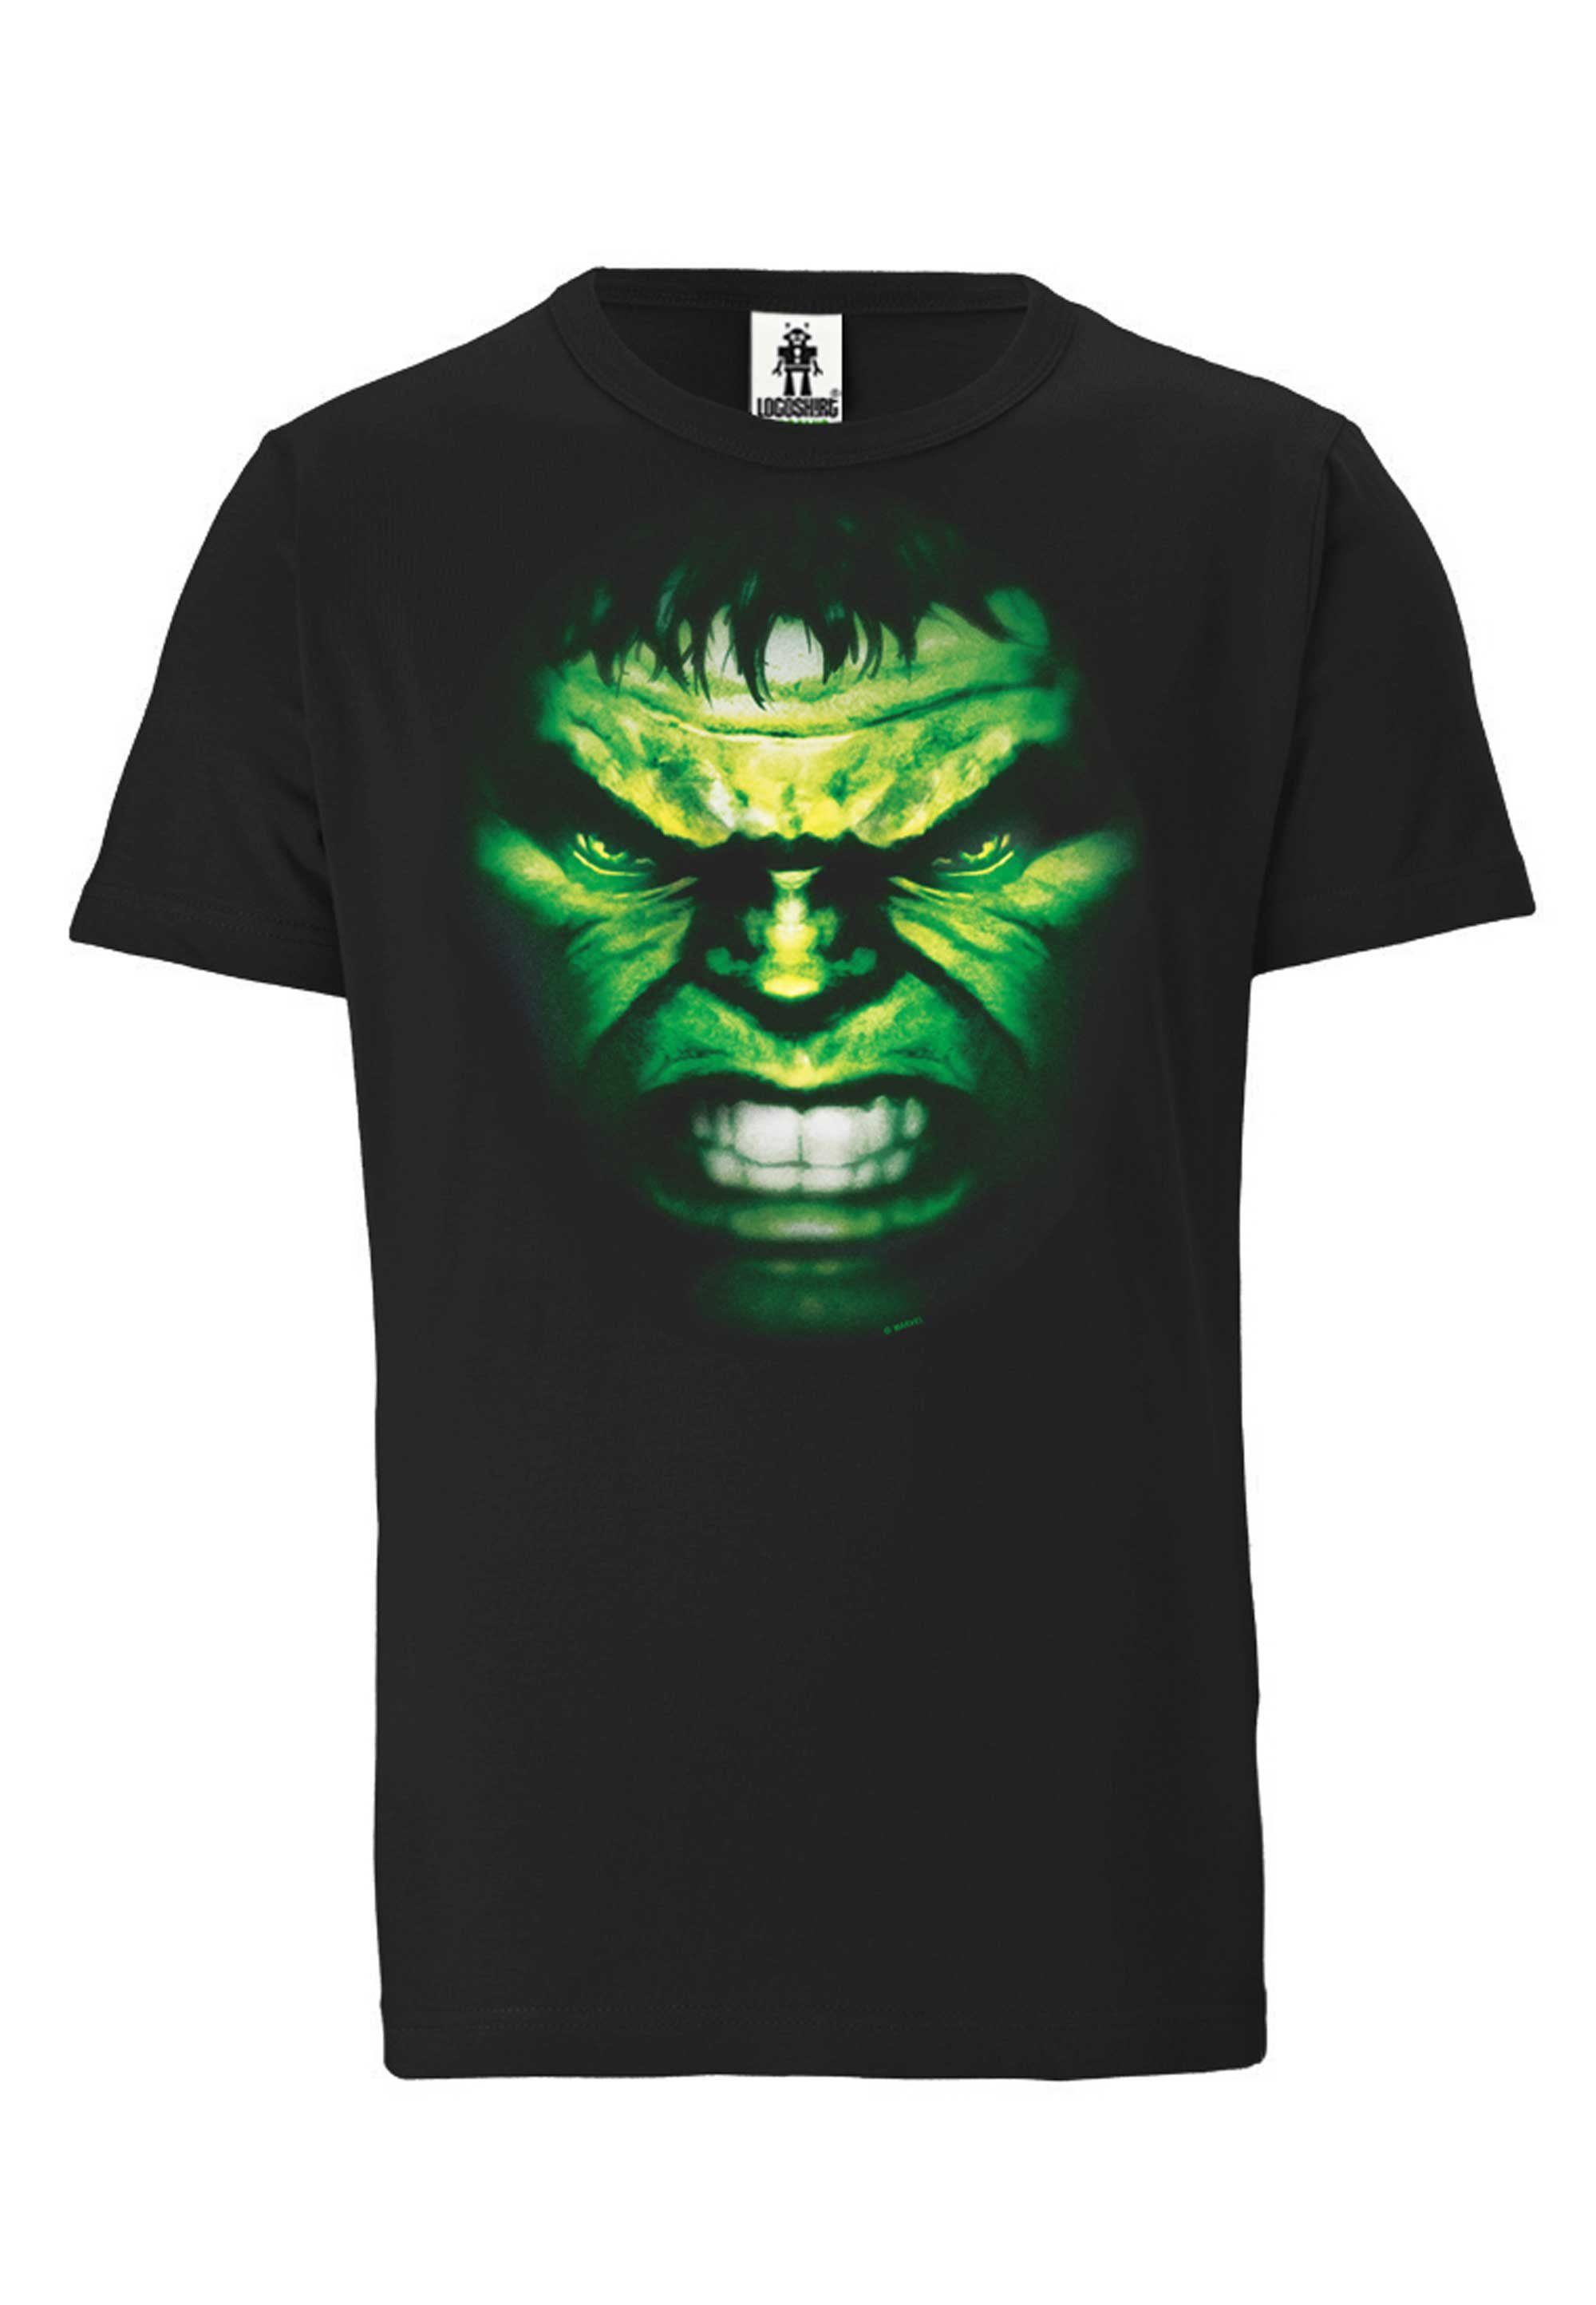 LOGOSHIRT T-Shirt Marvel Hulk - Hulk-Print Gesicht mit tollem